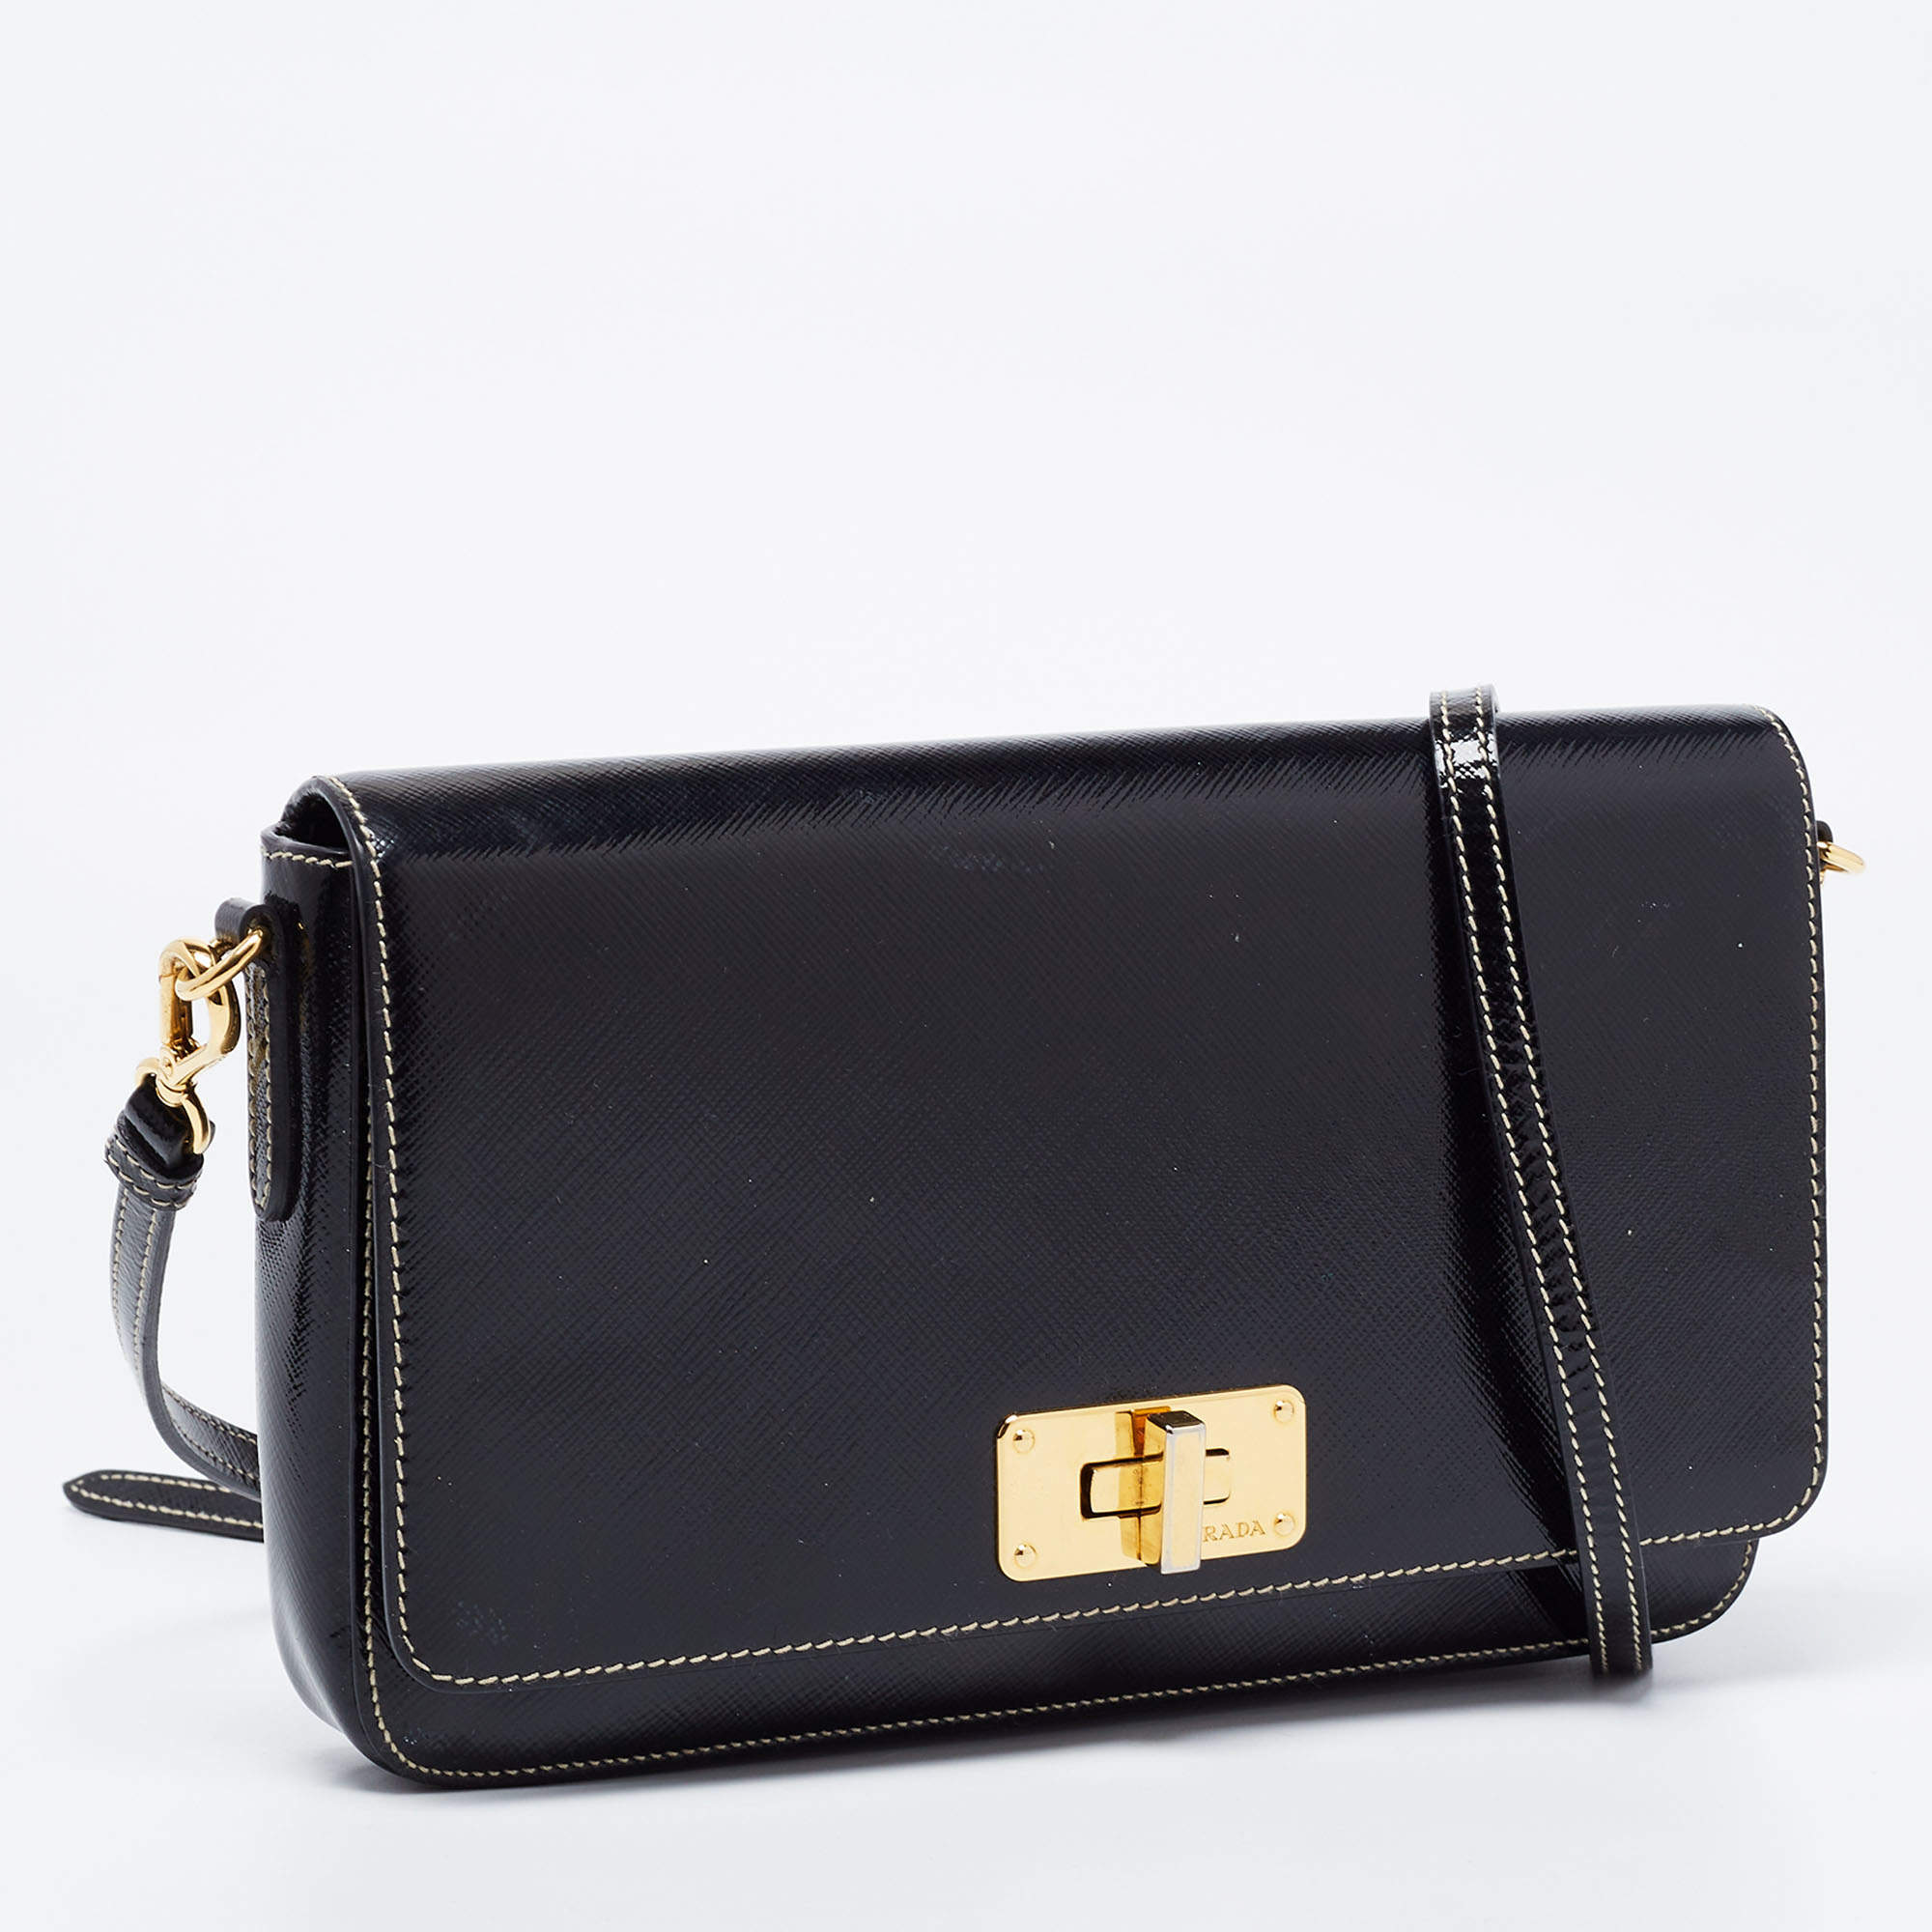 Prada Saffiano Vernice Black Leather Crossbody Bag – The